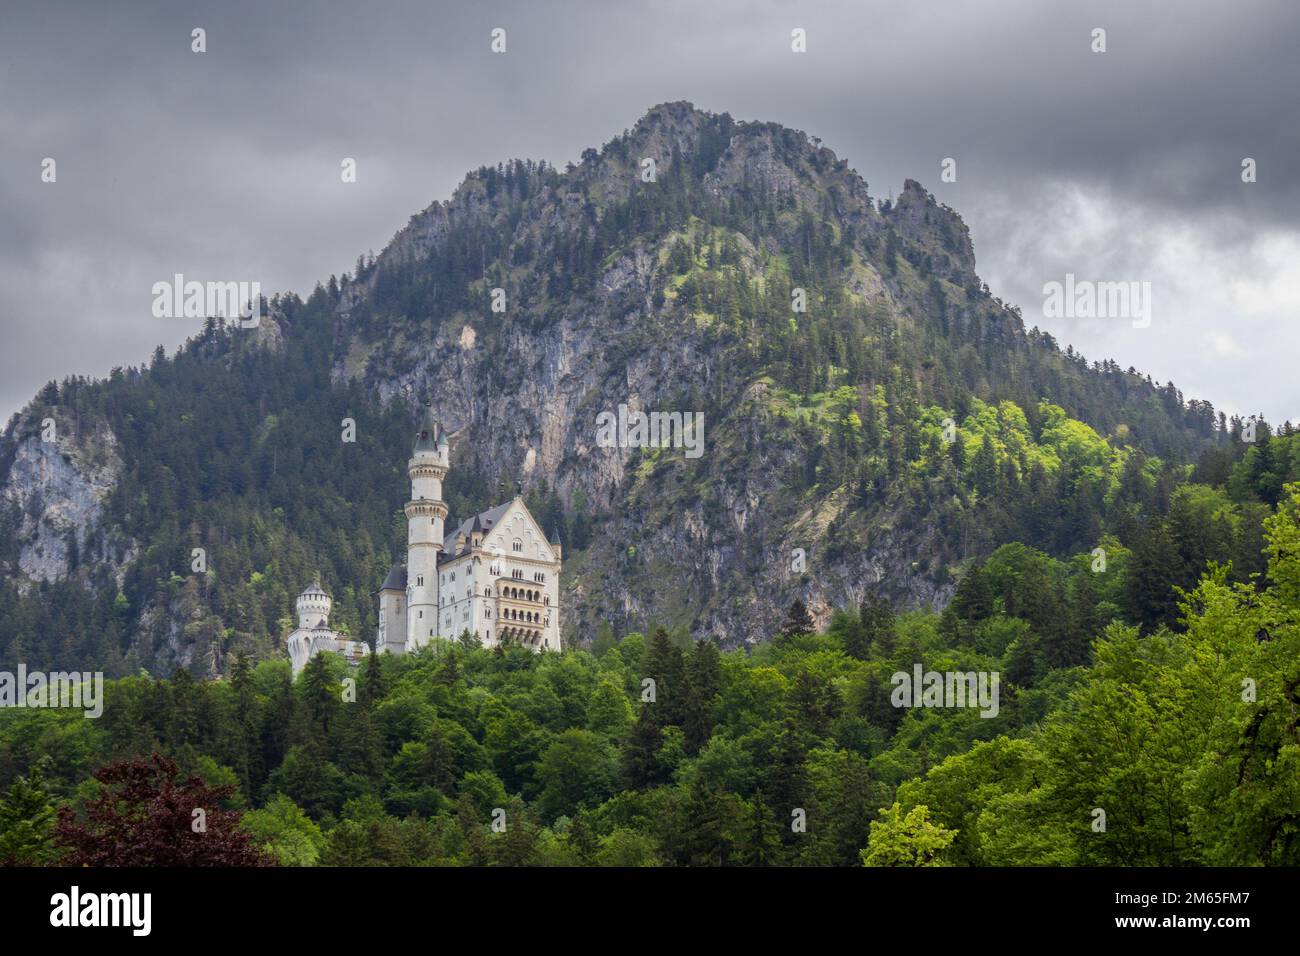 View of famous Neuschwanstein Castle. Location: village of Hohenschwangau, near Füssen, southwest Bavaria, Germany, Europe Stock Photo